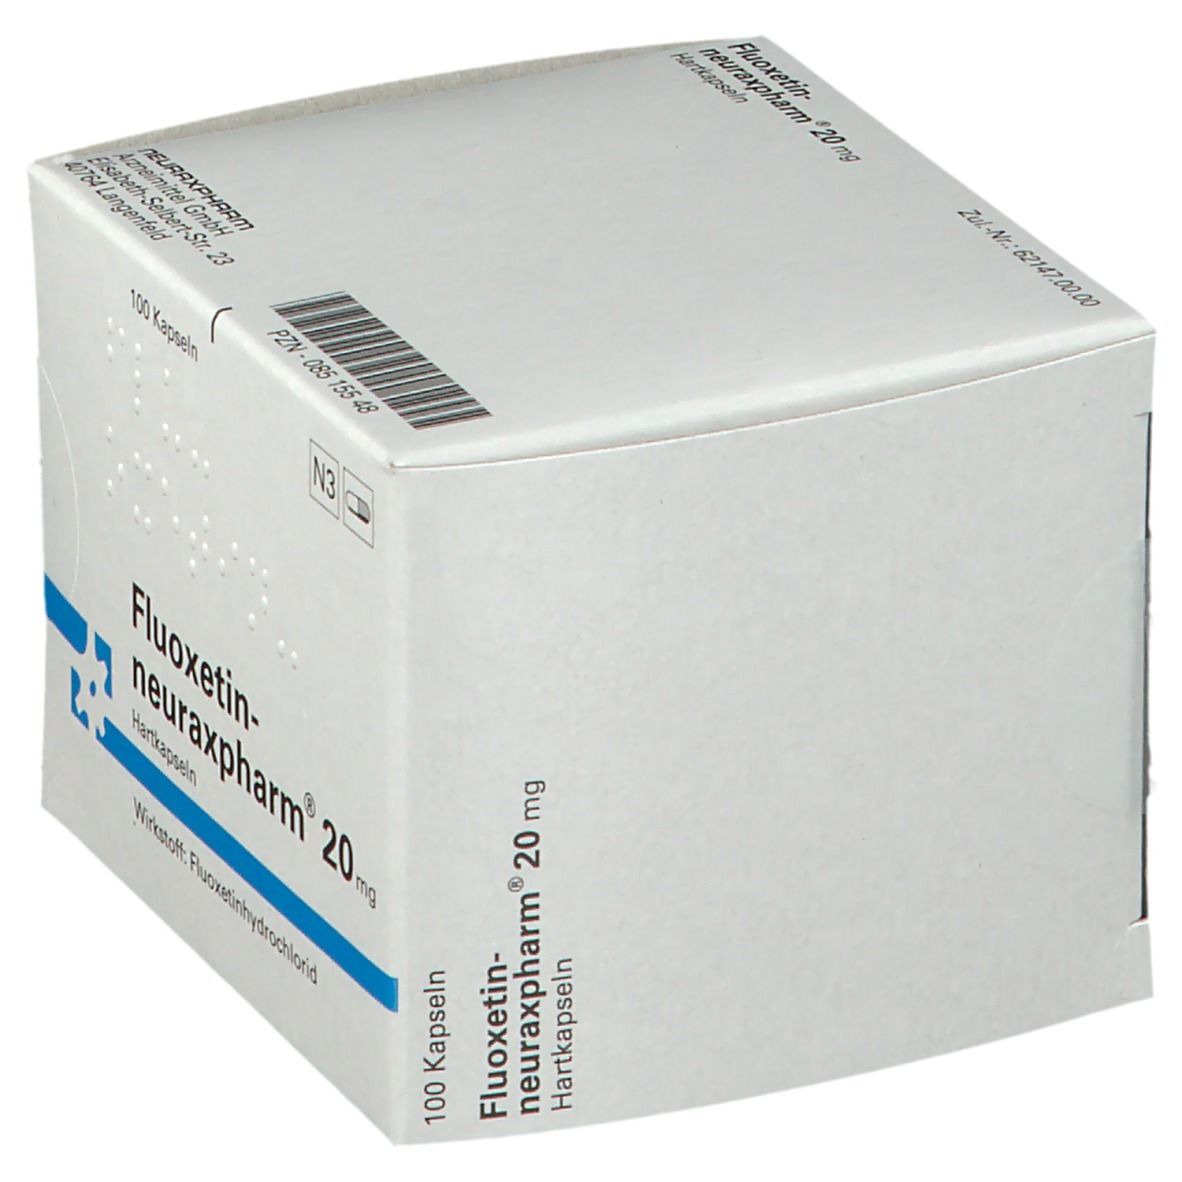 Fluoxetin-neuraxpharm® 20 mg